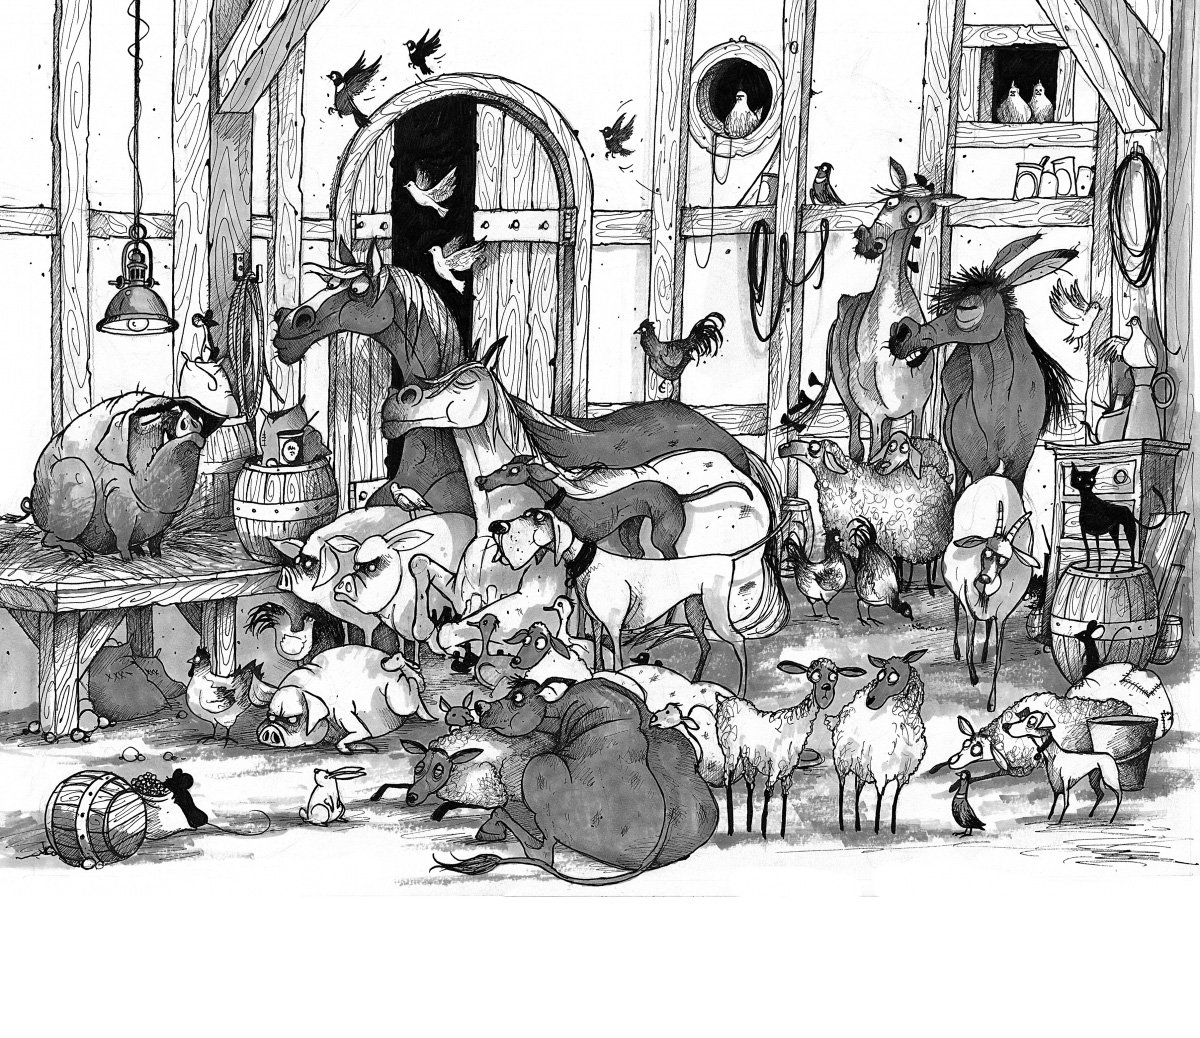 chris-mould-animal-farm-illustration.jpg